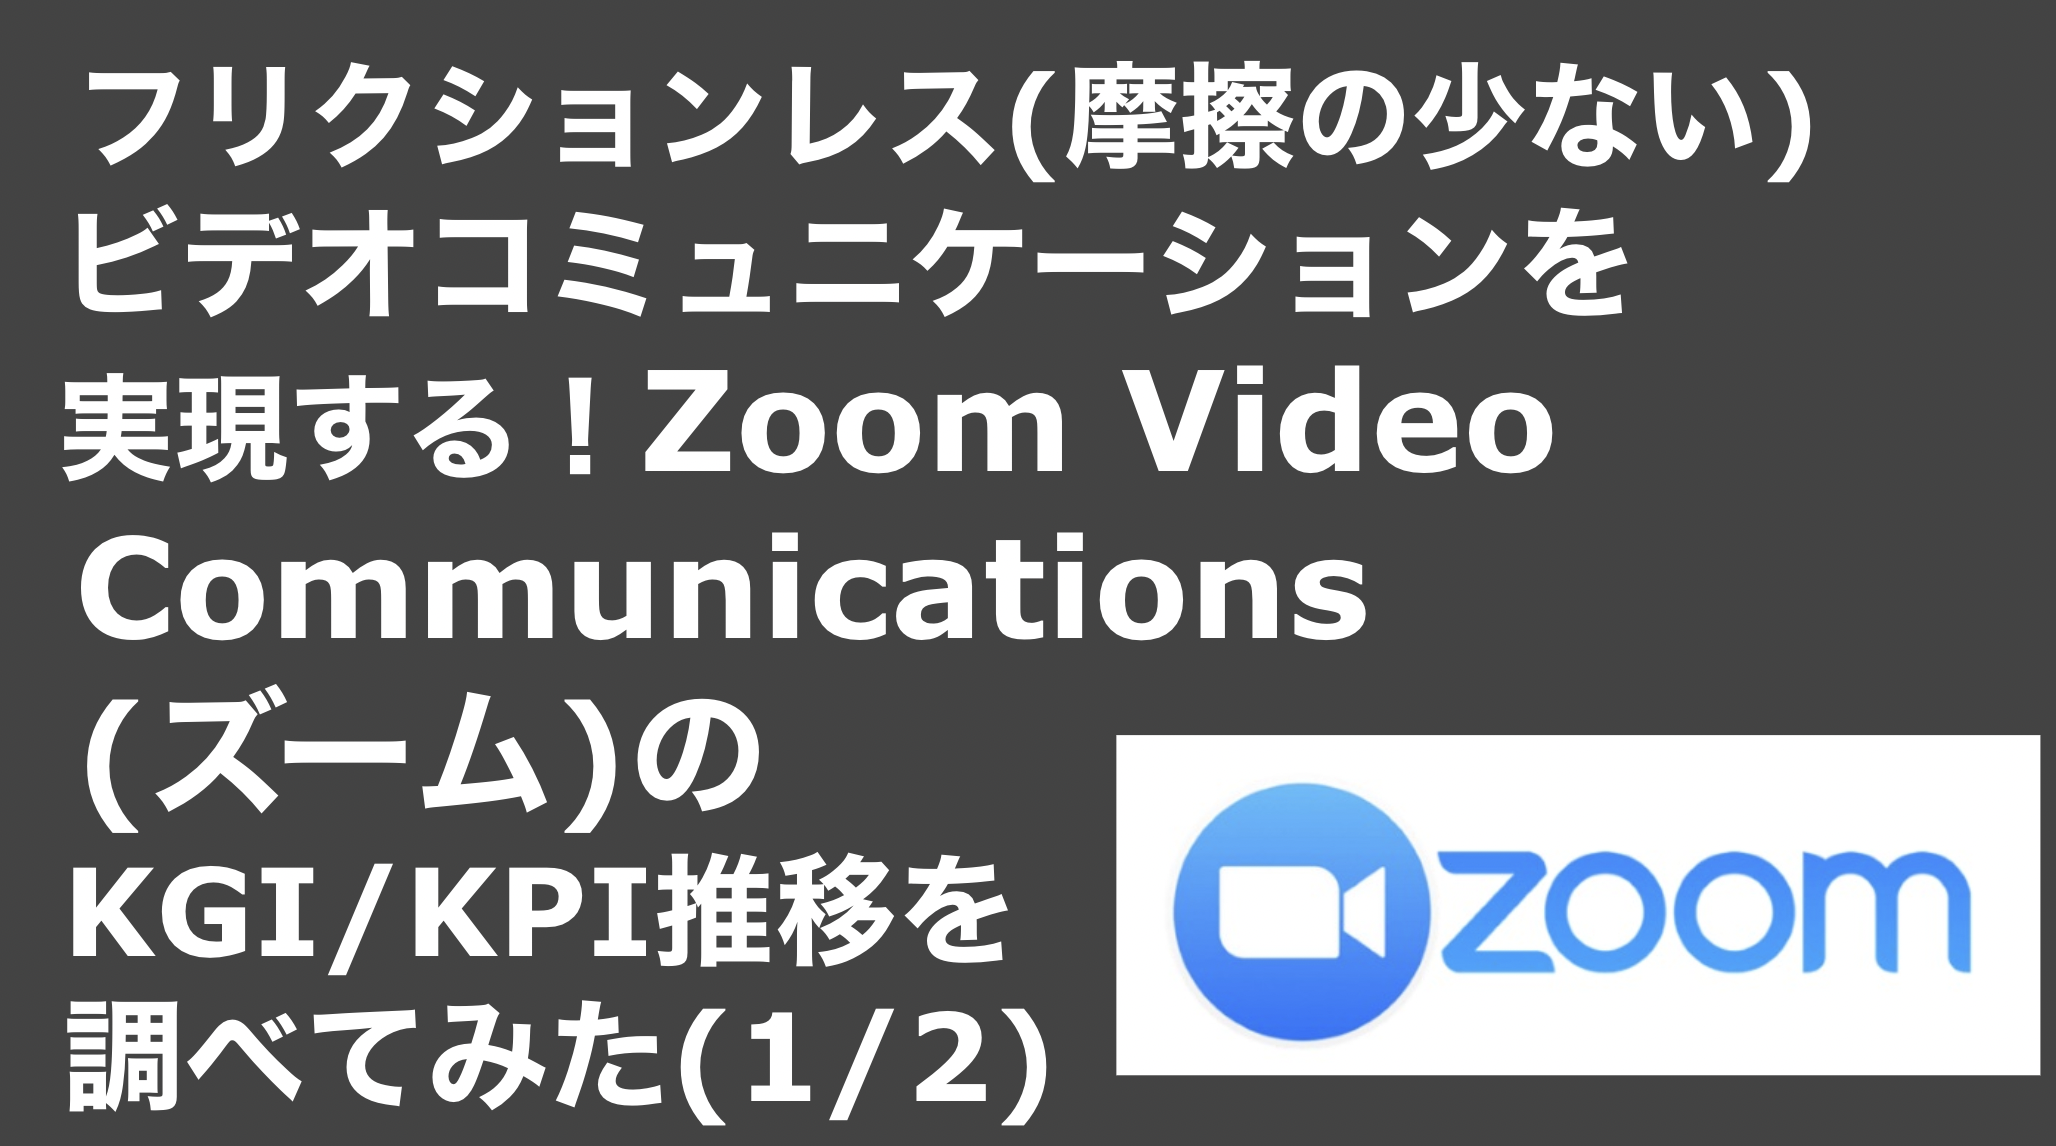 saaslife_ フリクションレス(摩擦の少ない)ビデオコミュニケーションを実現する！Zoom Video Communications(ズーム)のKGI/KPI推移を調べてみた(1/2)